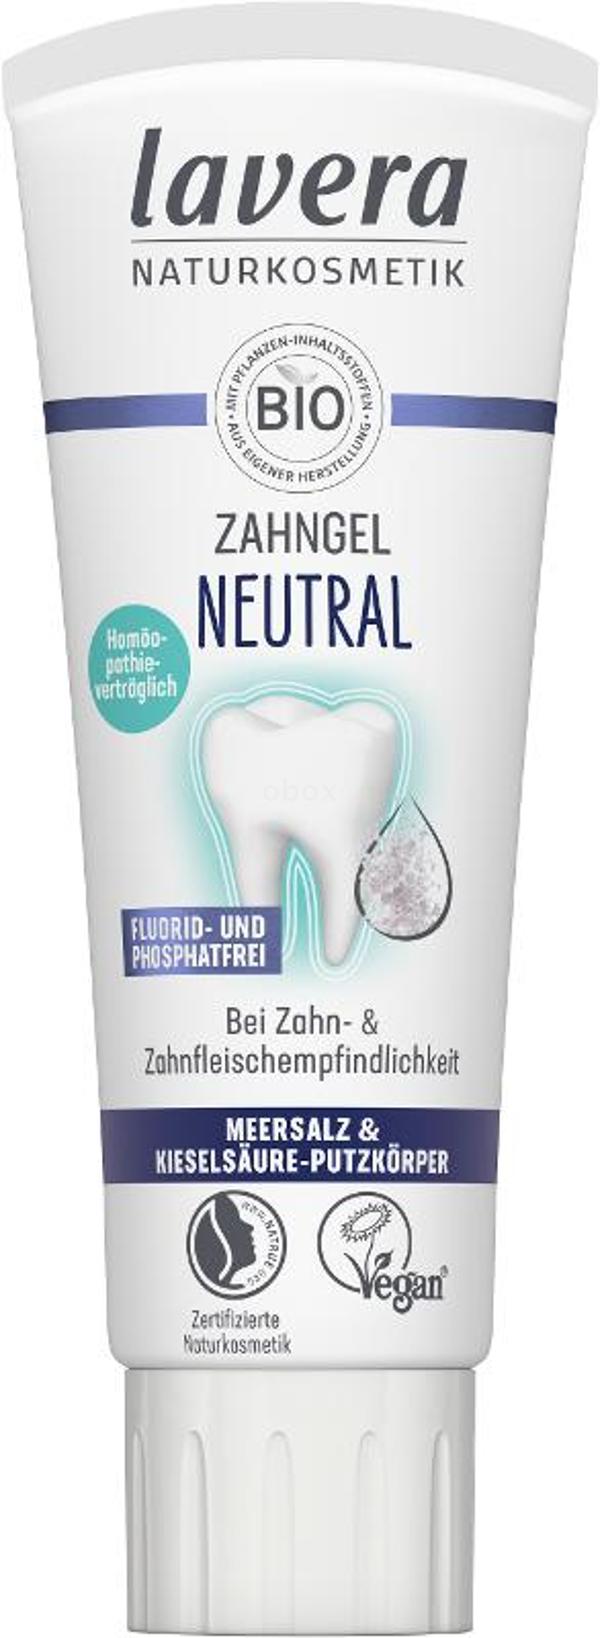 Produktfoto zu Zahngel Neutral, 75 ml